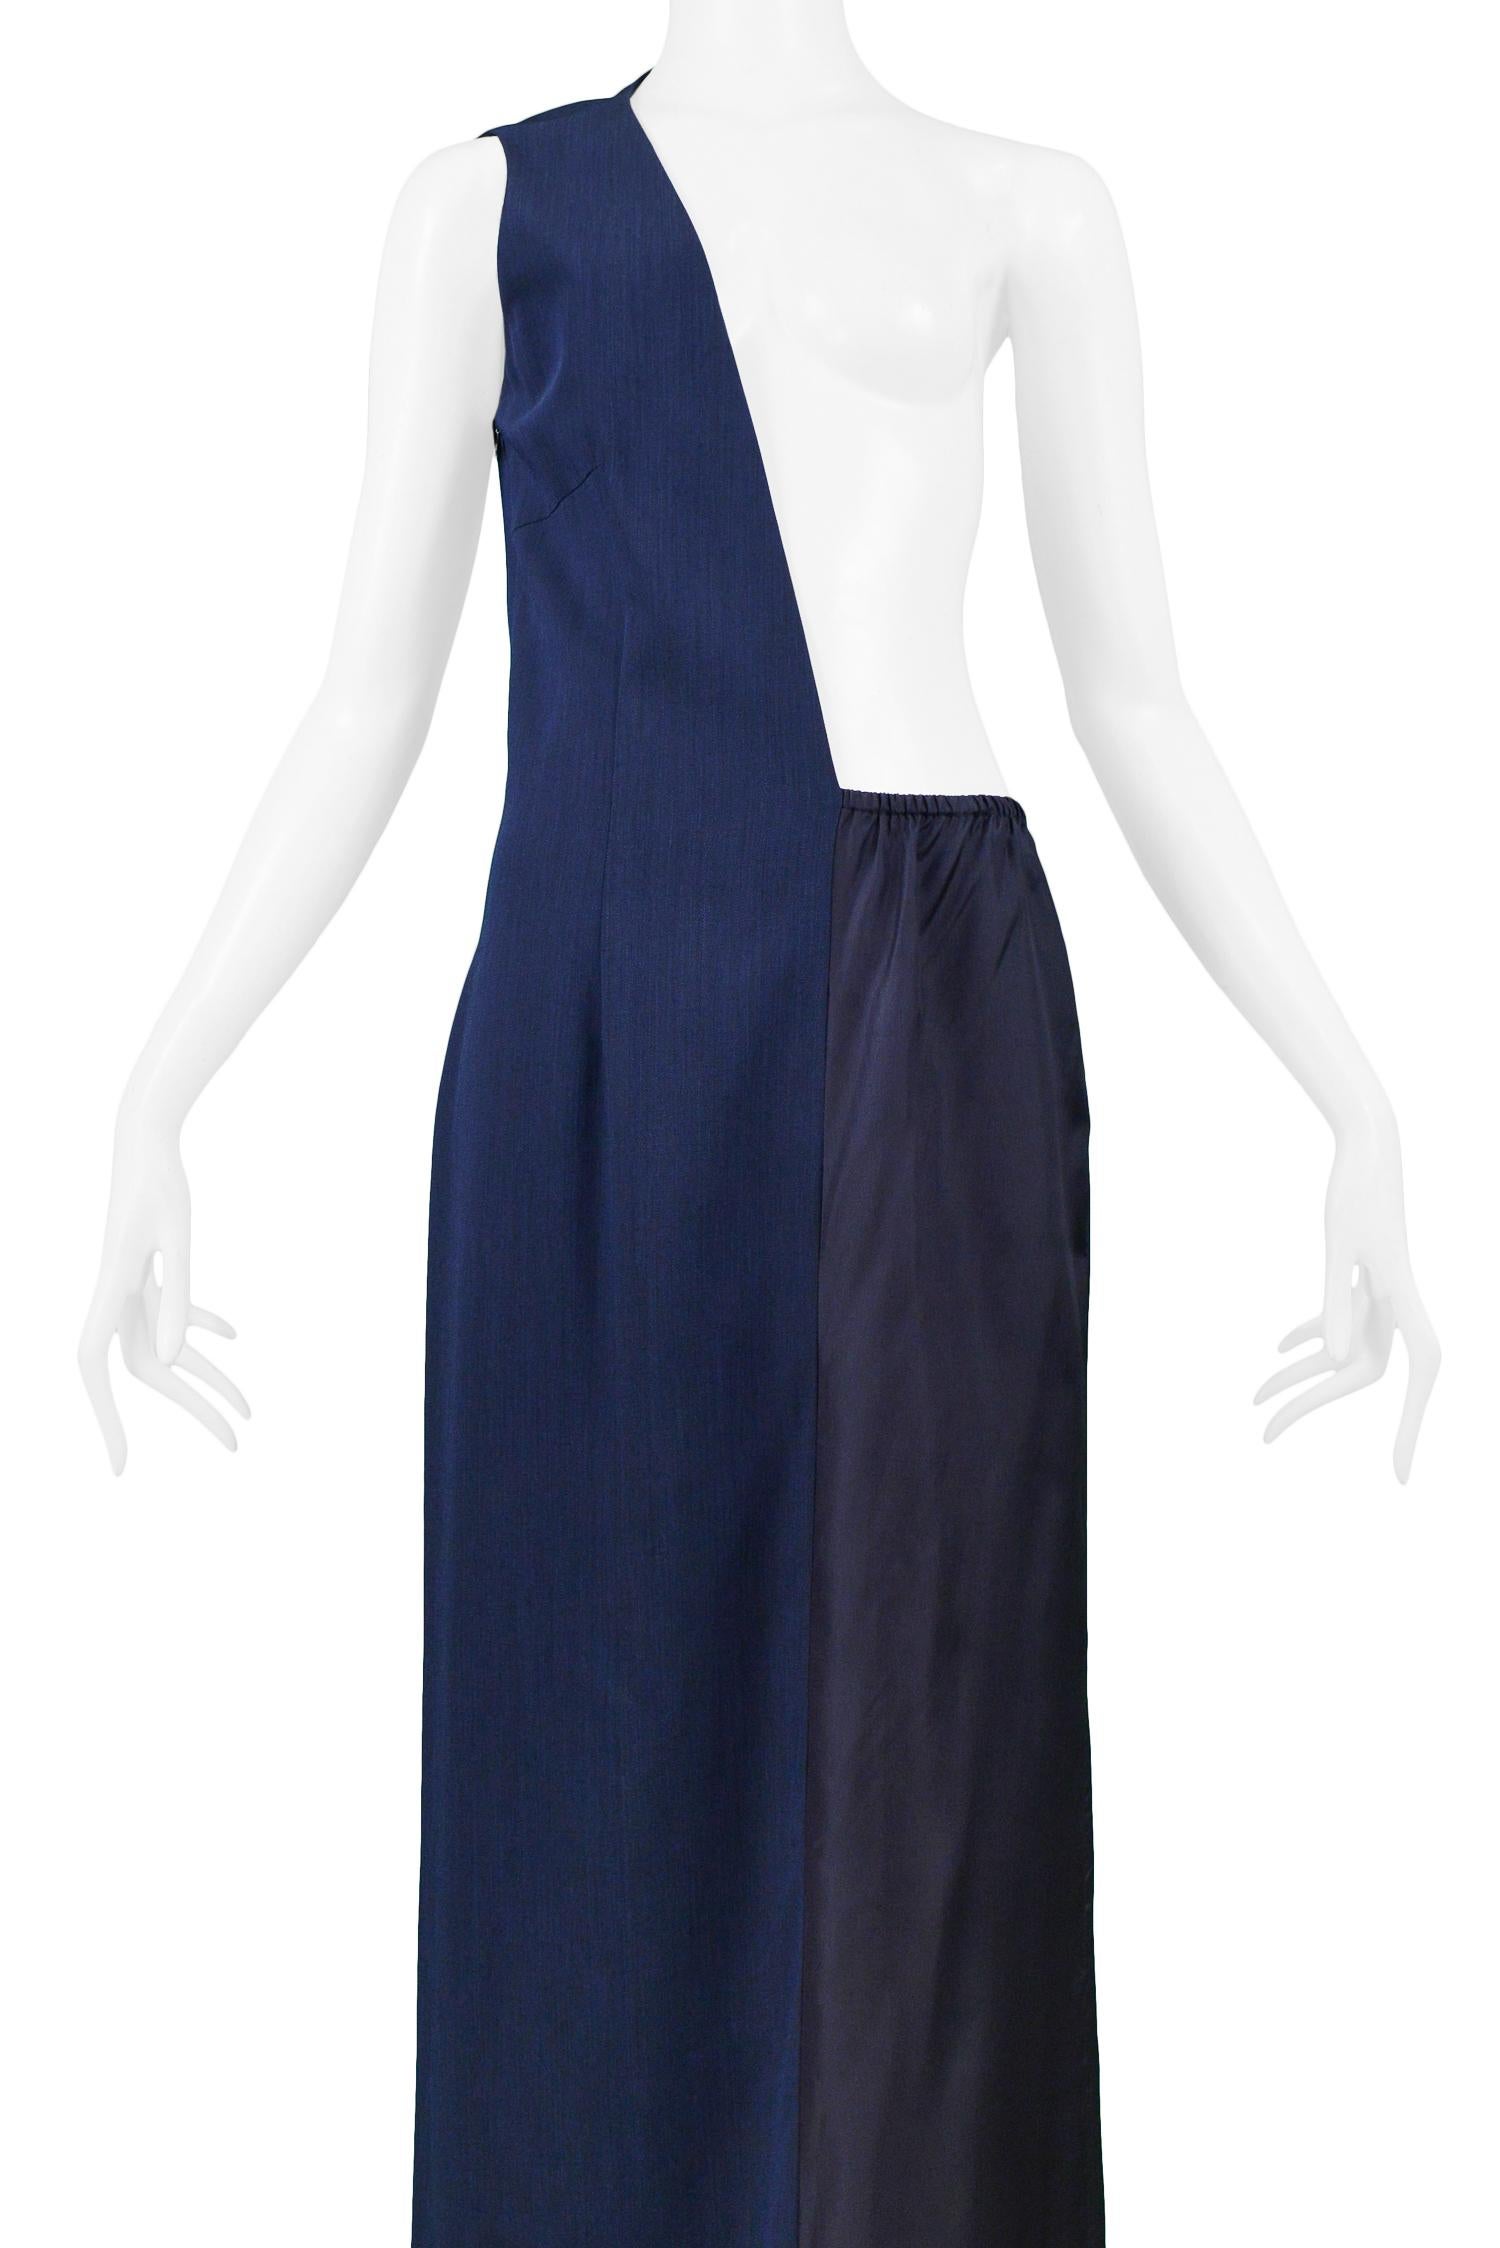 Black Maison Martin Margiela Blue Asymmetrical Avant Garde Maxi Apron Dress